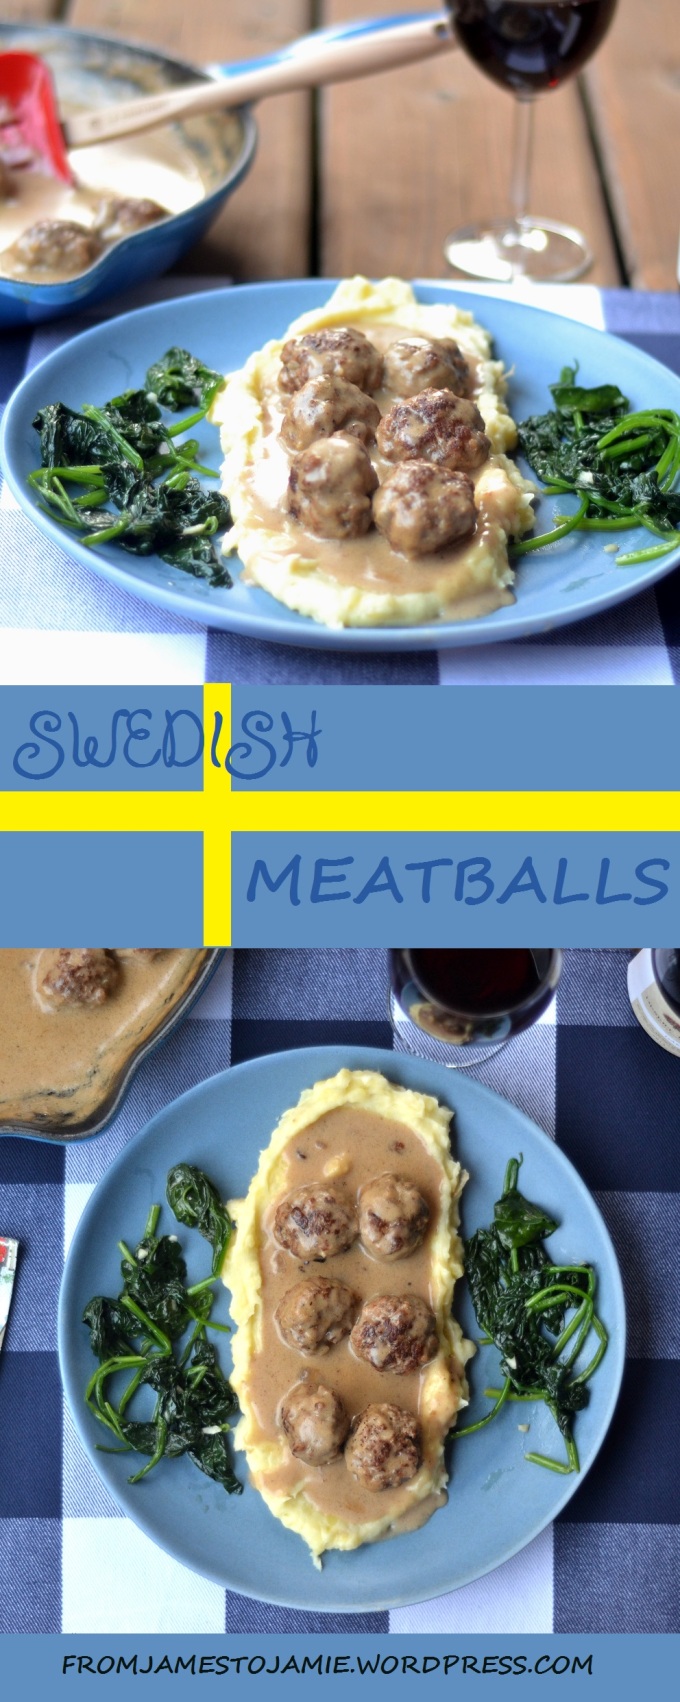 Swedish Meatballs - From James to Jamie